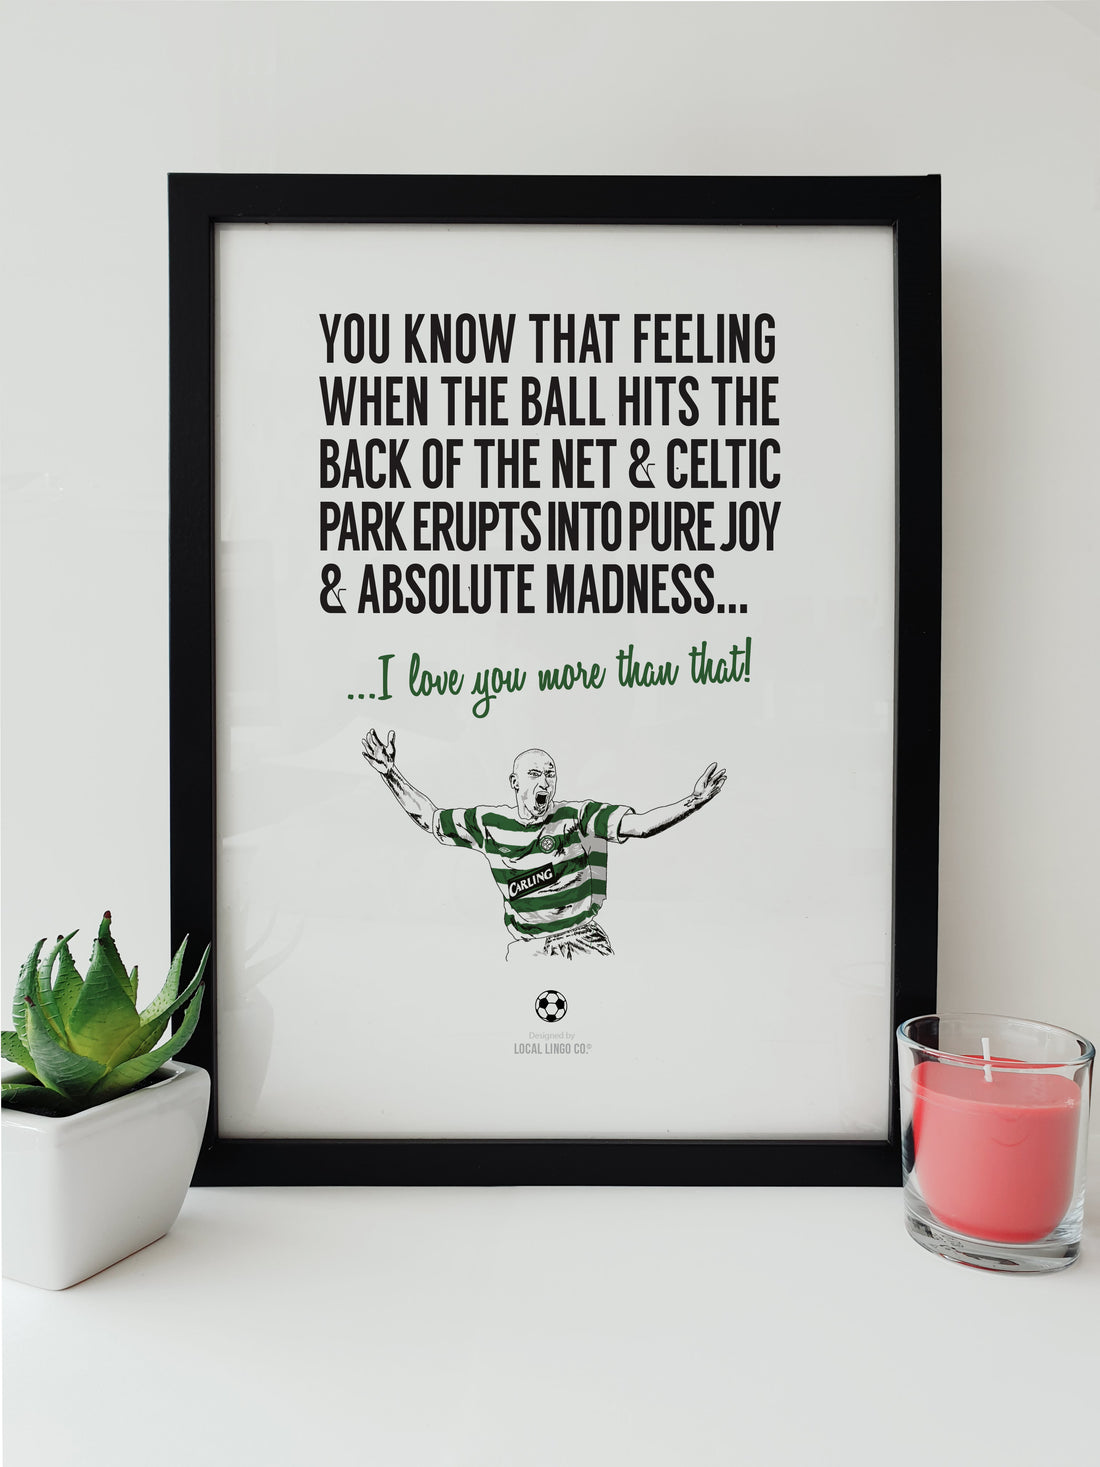 Celtic FC's Henrik Larsson celebration illustration on a print, evoking the excitement of a goal at Celtic Park, from Local Lingo.